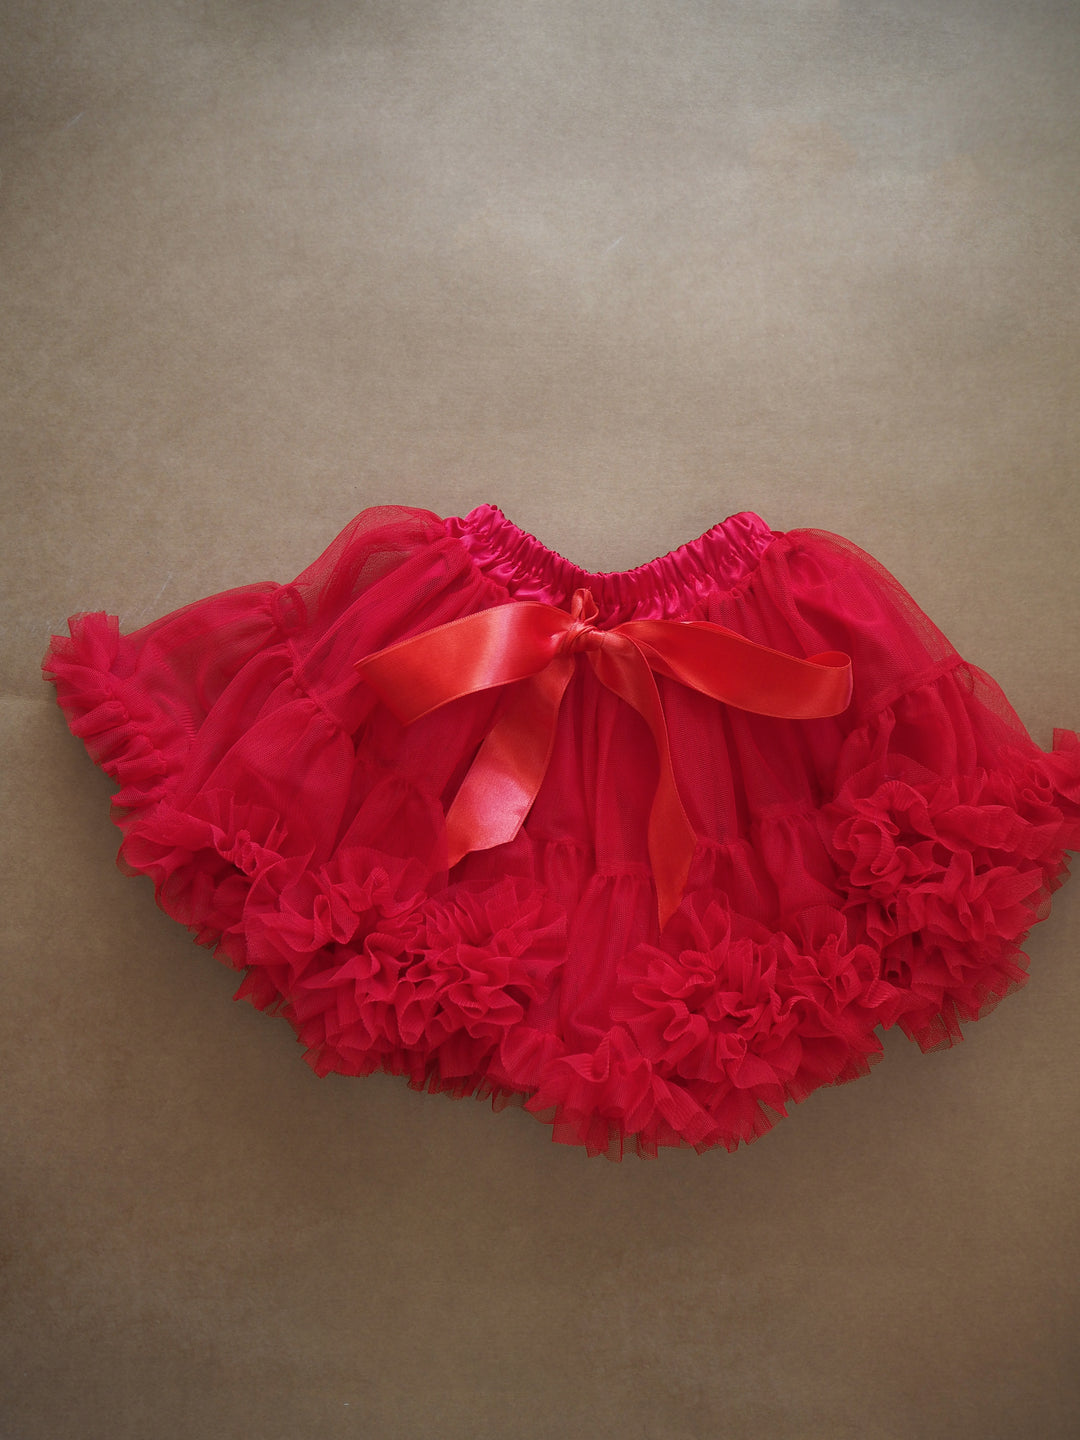 Tutu Red skirt